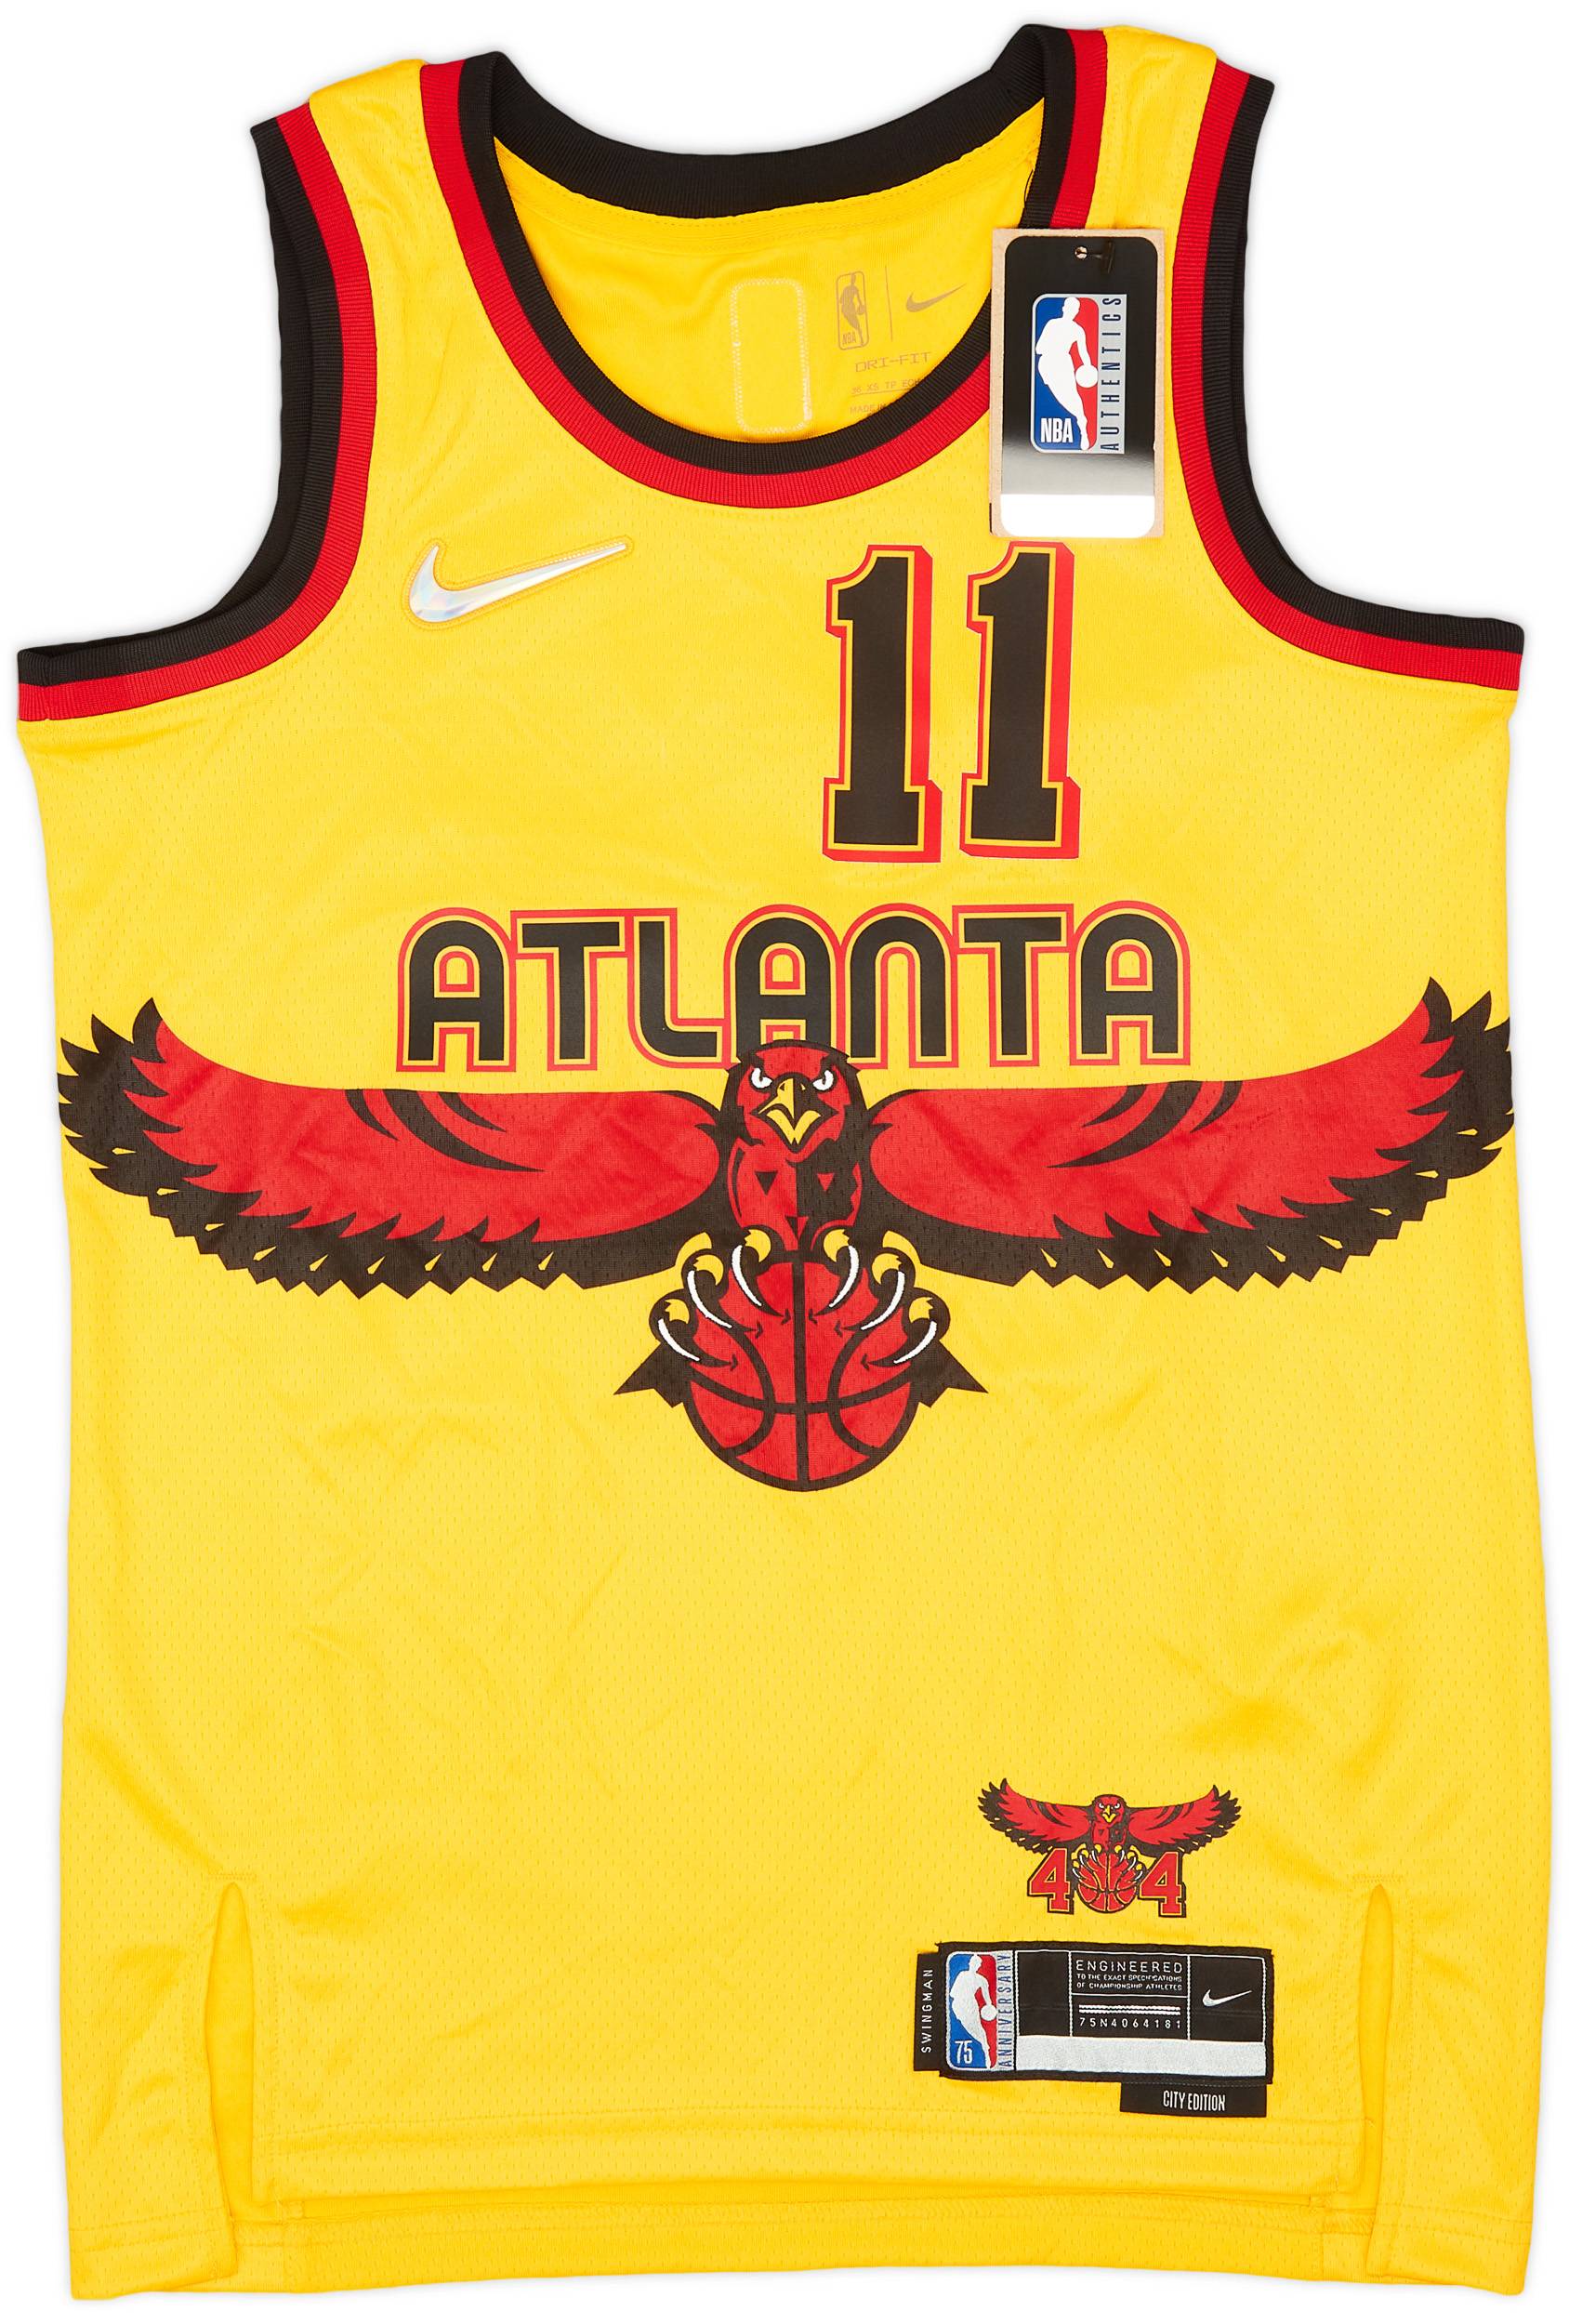 2021-22 Atlanta Hawks Young #11 Nike Swingman Alternate Jersey (XS)